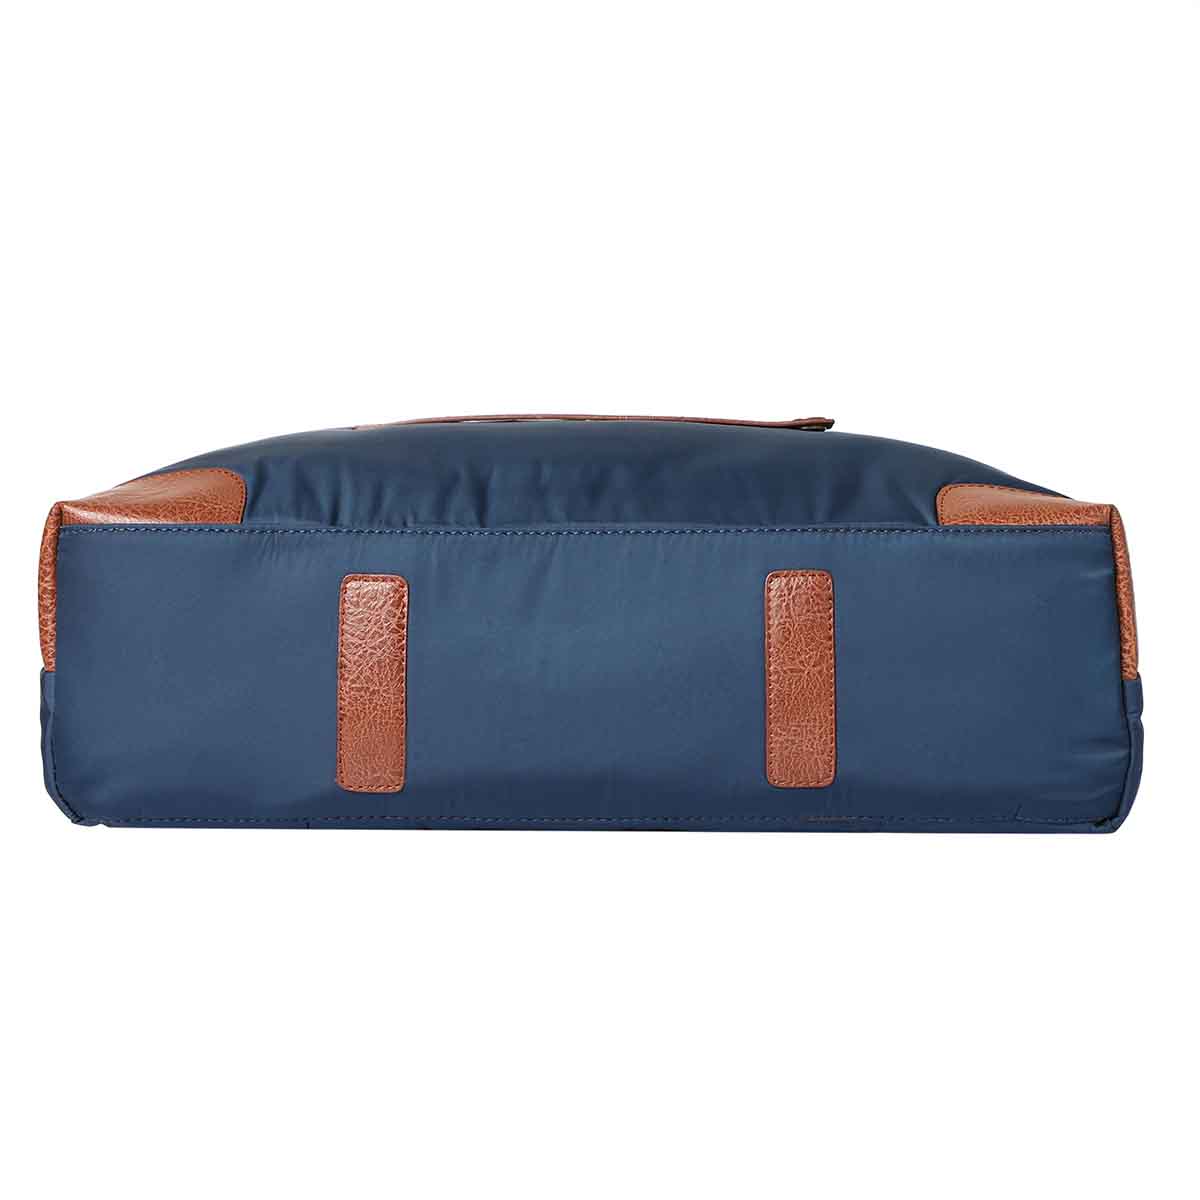 Mona B Unisex Messenger | Small Overnighter Bag for upto 14" Laptop/Mac Book/Tablet with Stylish Design: Ohio Navy - RP-306 NAV